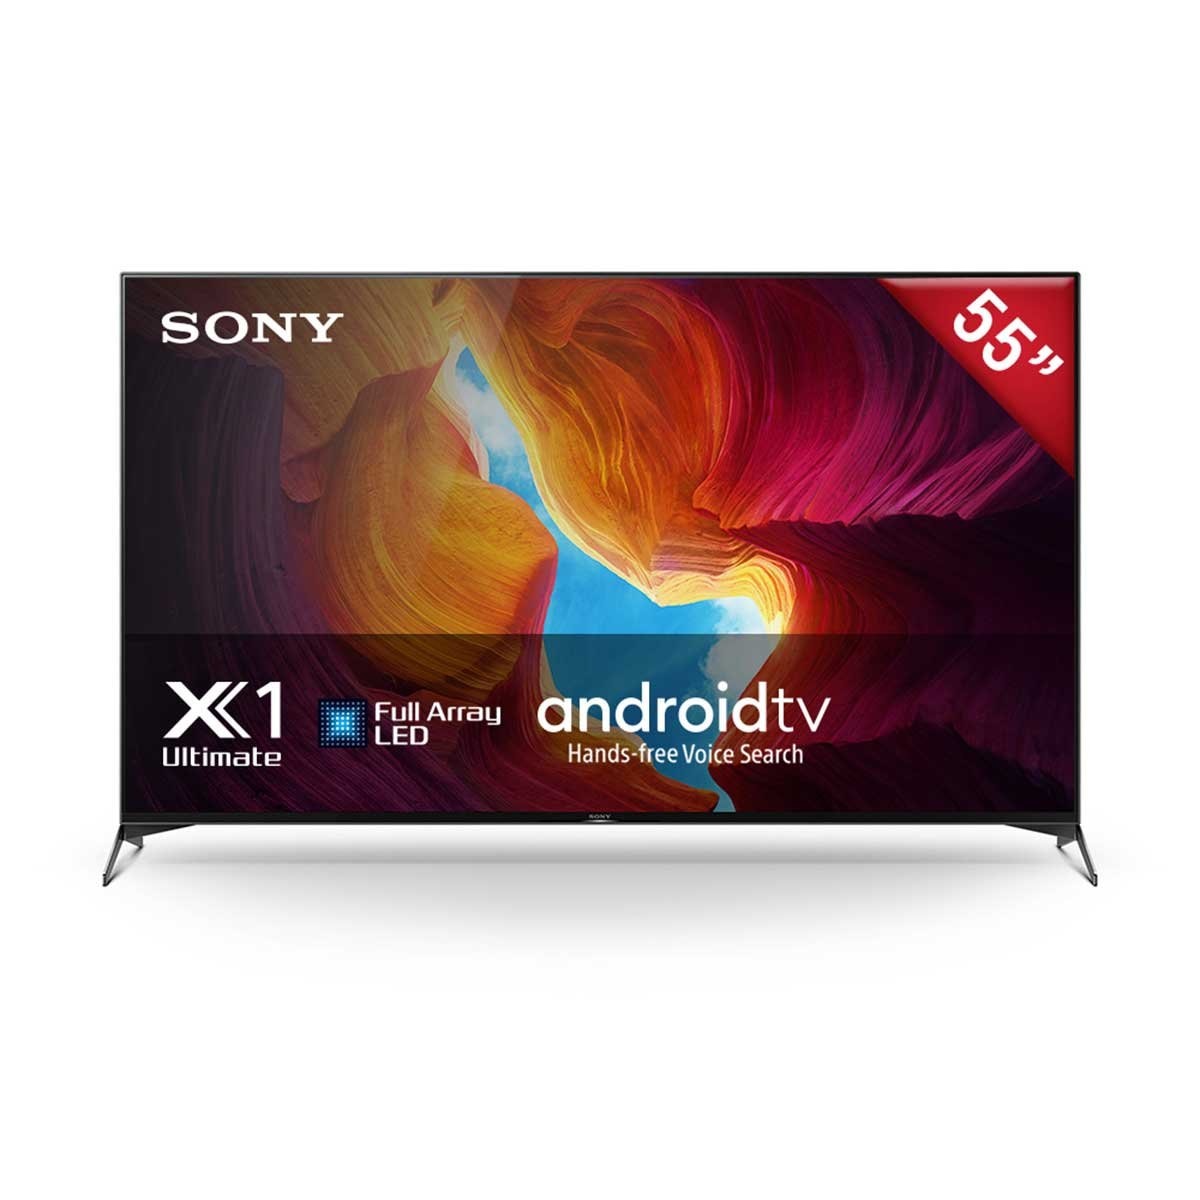 Pantalla Sony 55" 4K Uhd Android Tv Xbr-55X950H